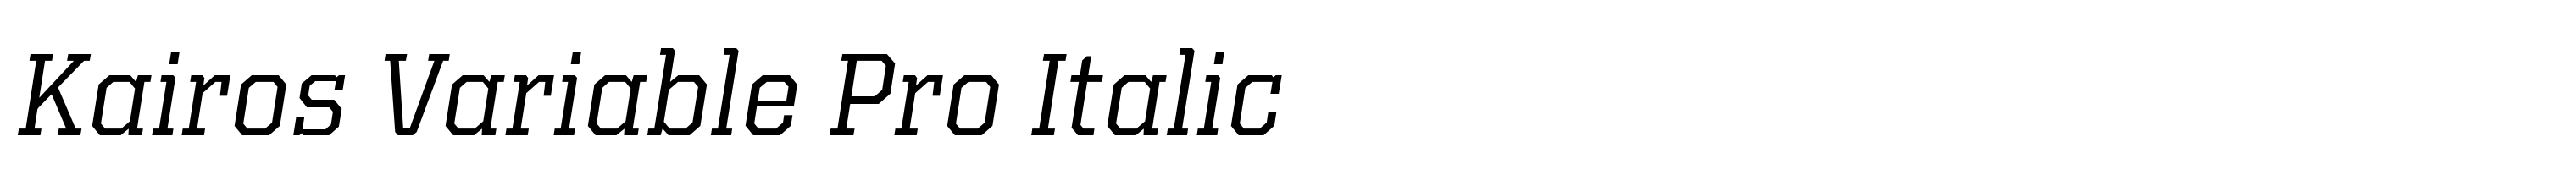 Kairos Variable Pro Italic